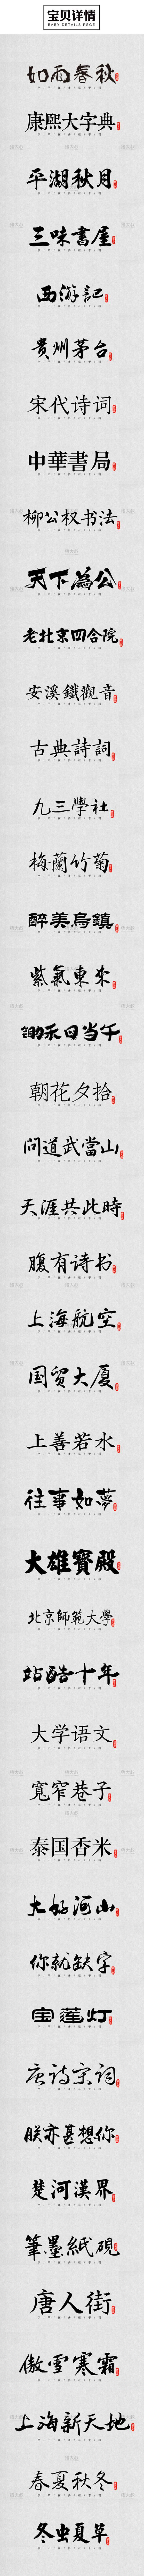 ps字体包库下载古风艺术ai设计ppt手写中文书法毛笔procreate素材 设计素材 第2张